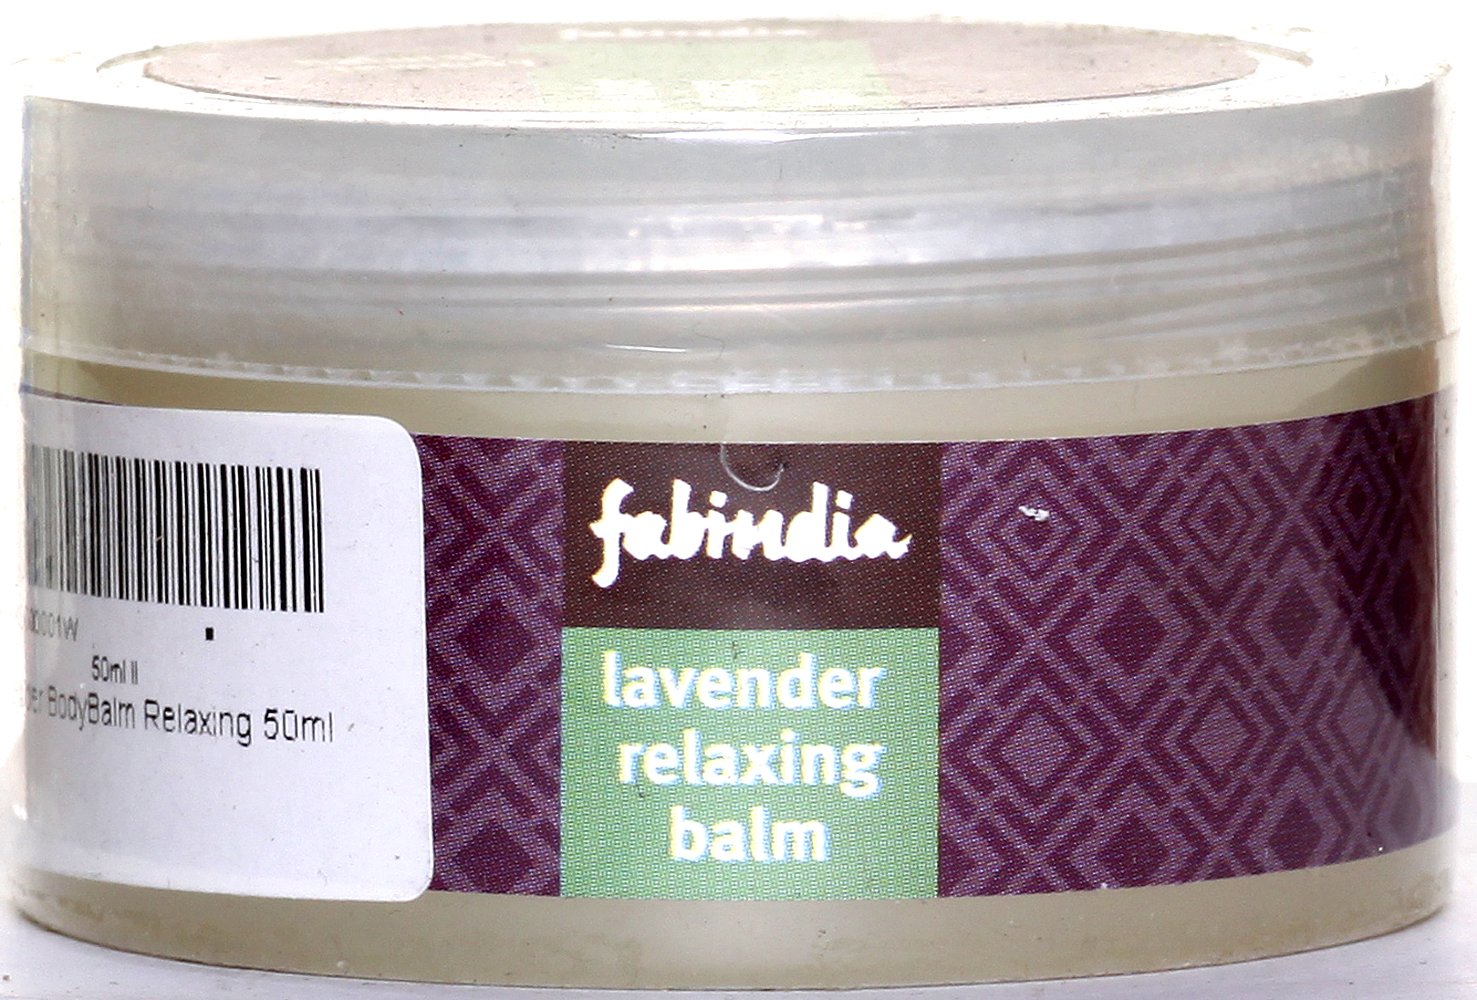 Fabindia Lavender Relaxing Balm - book cover